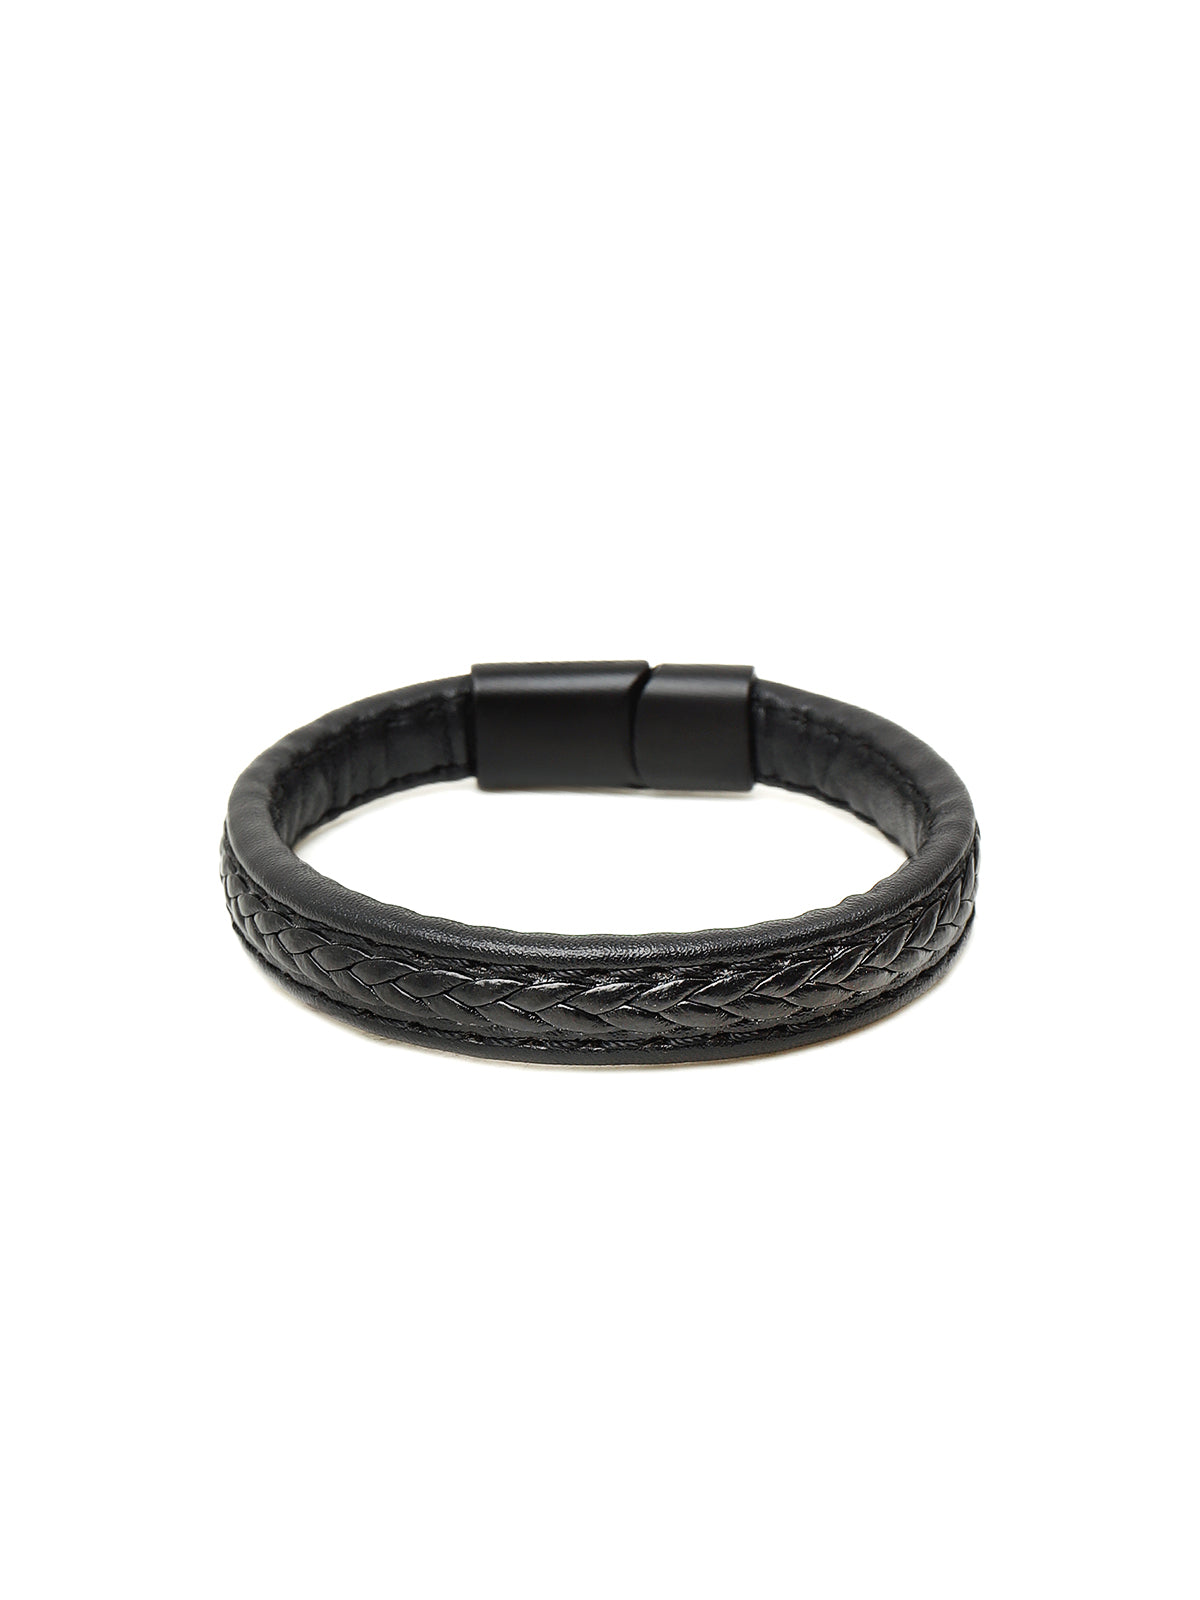 Black Leather Bracelet - FABR24-018